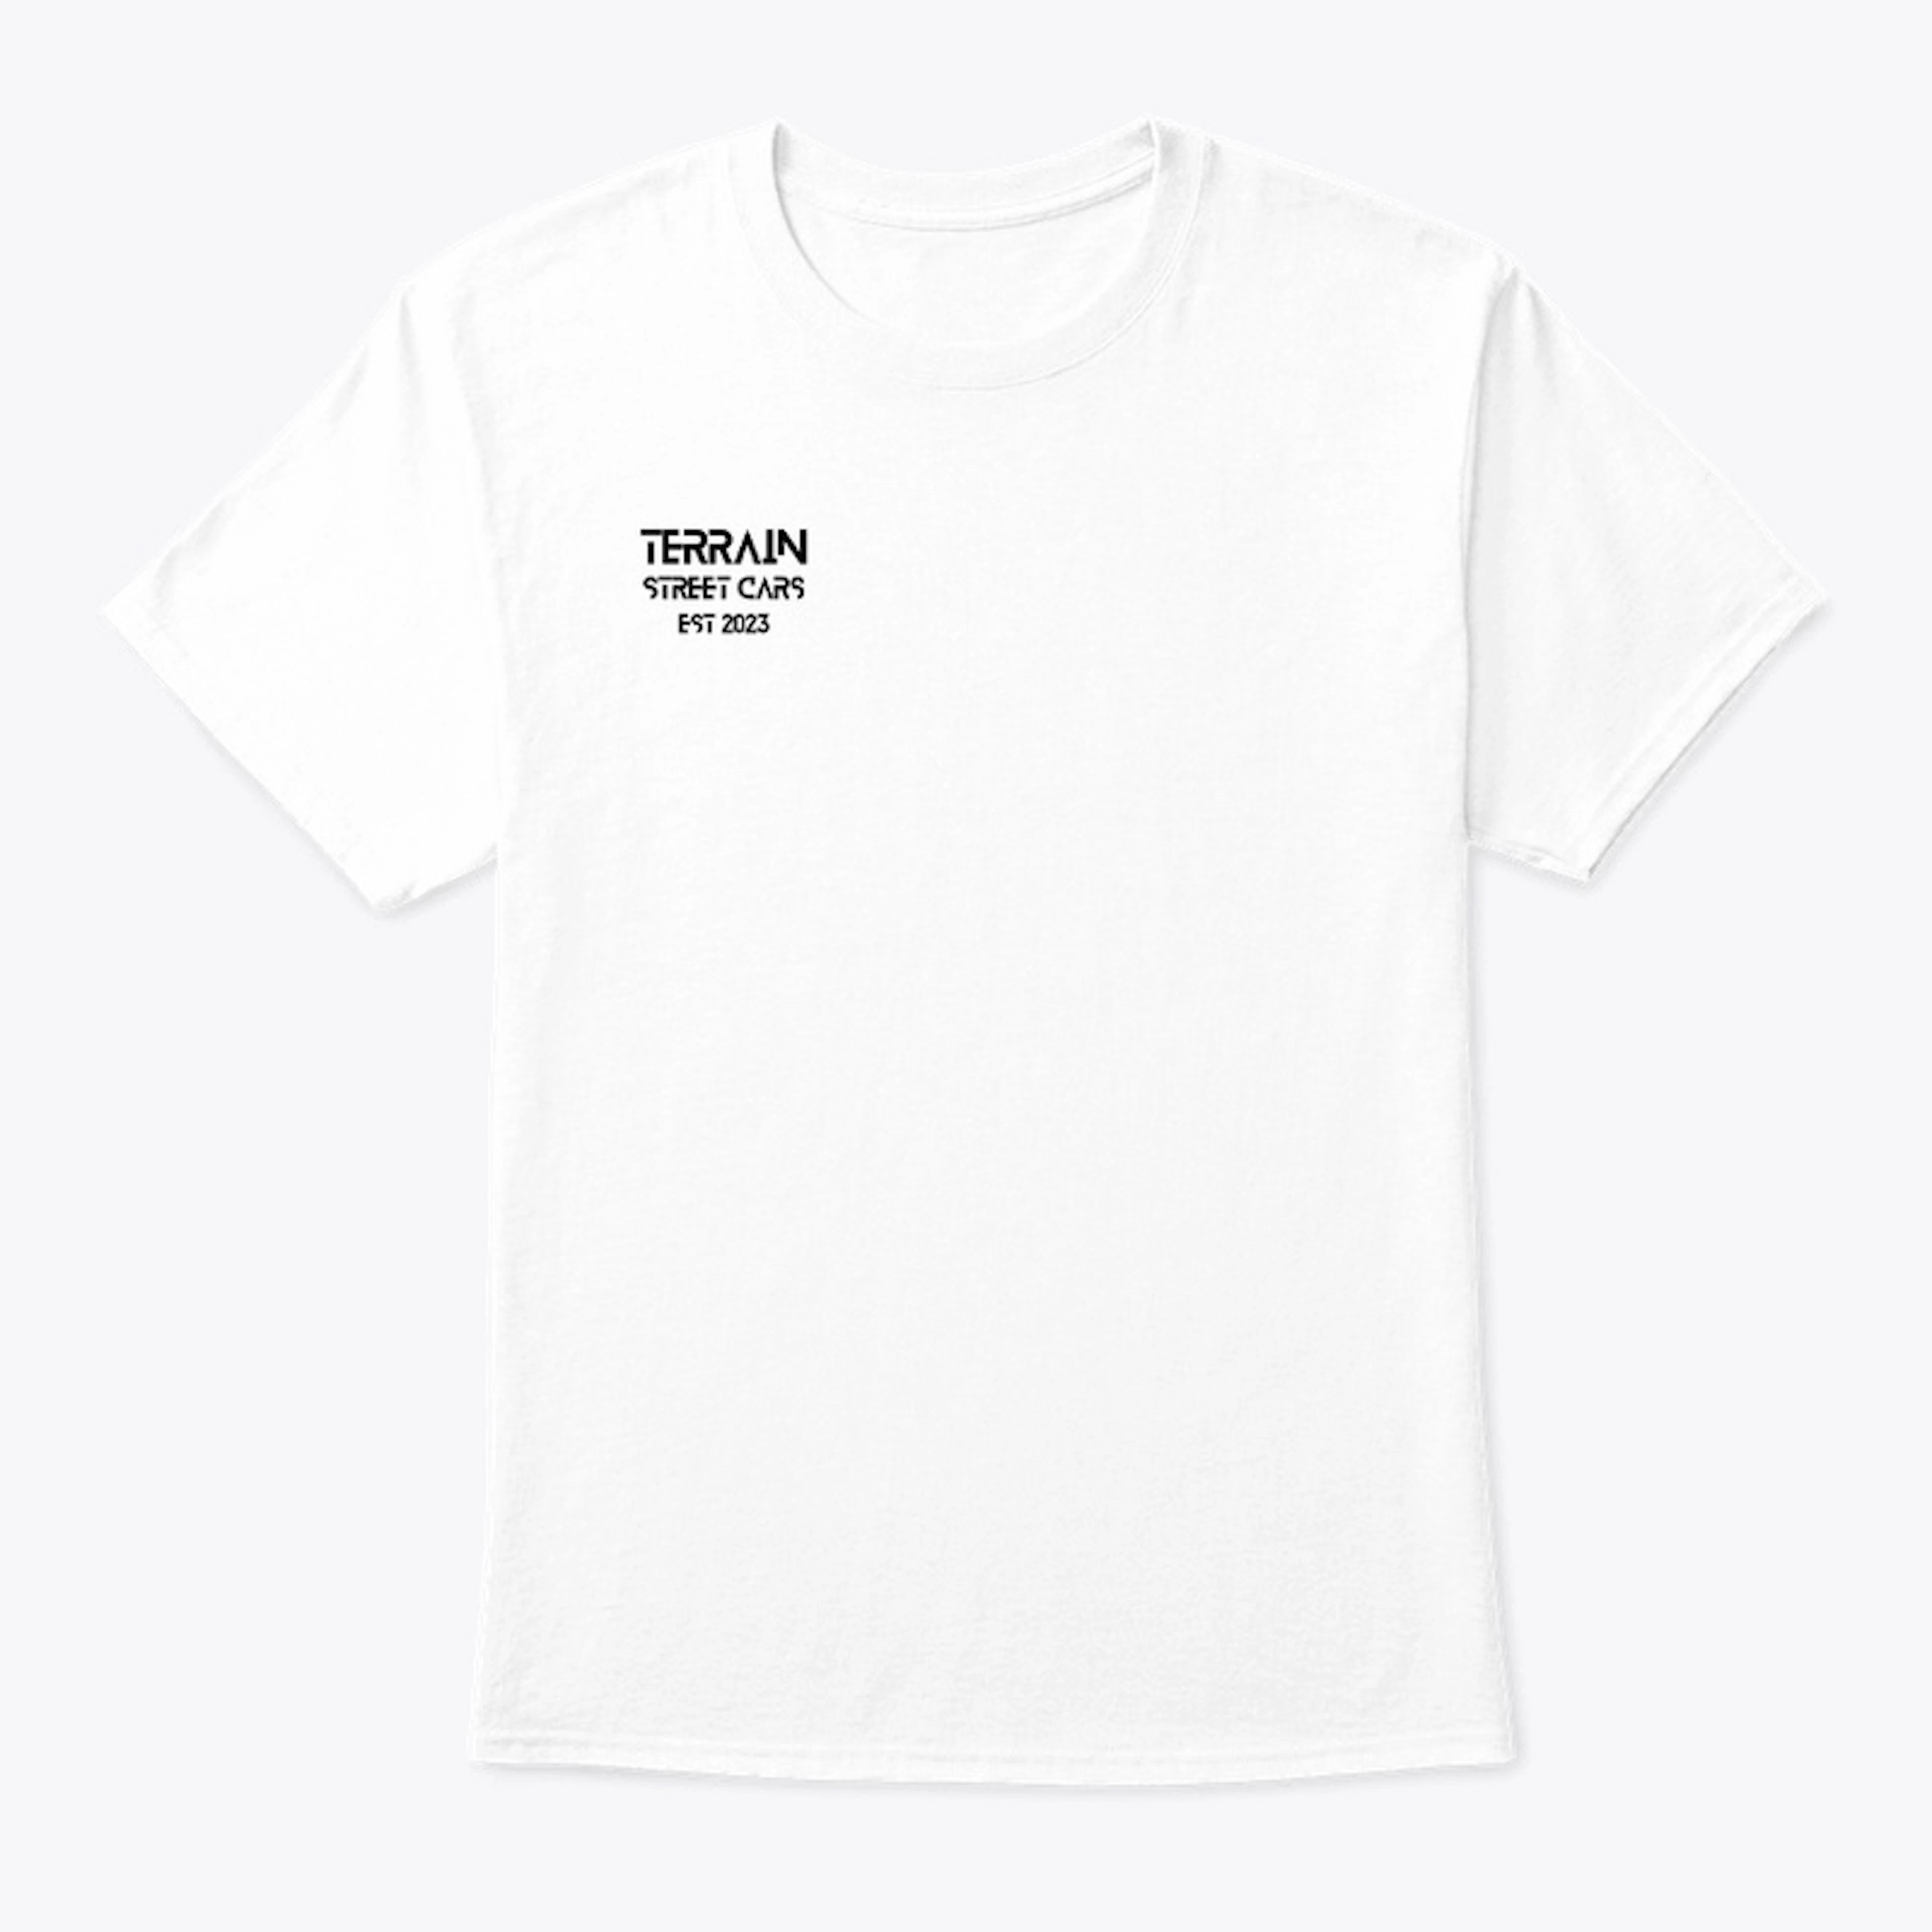 Terrain basic white t-shirt